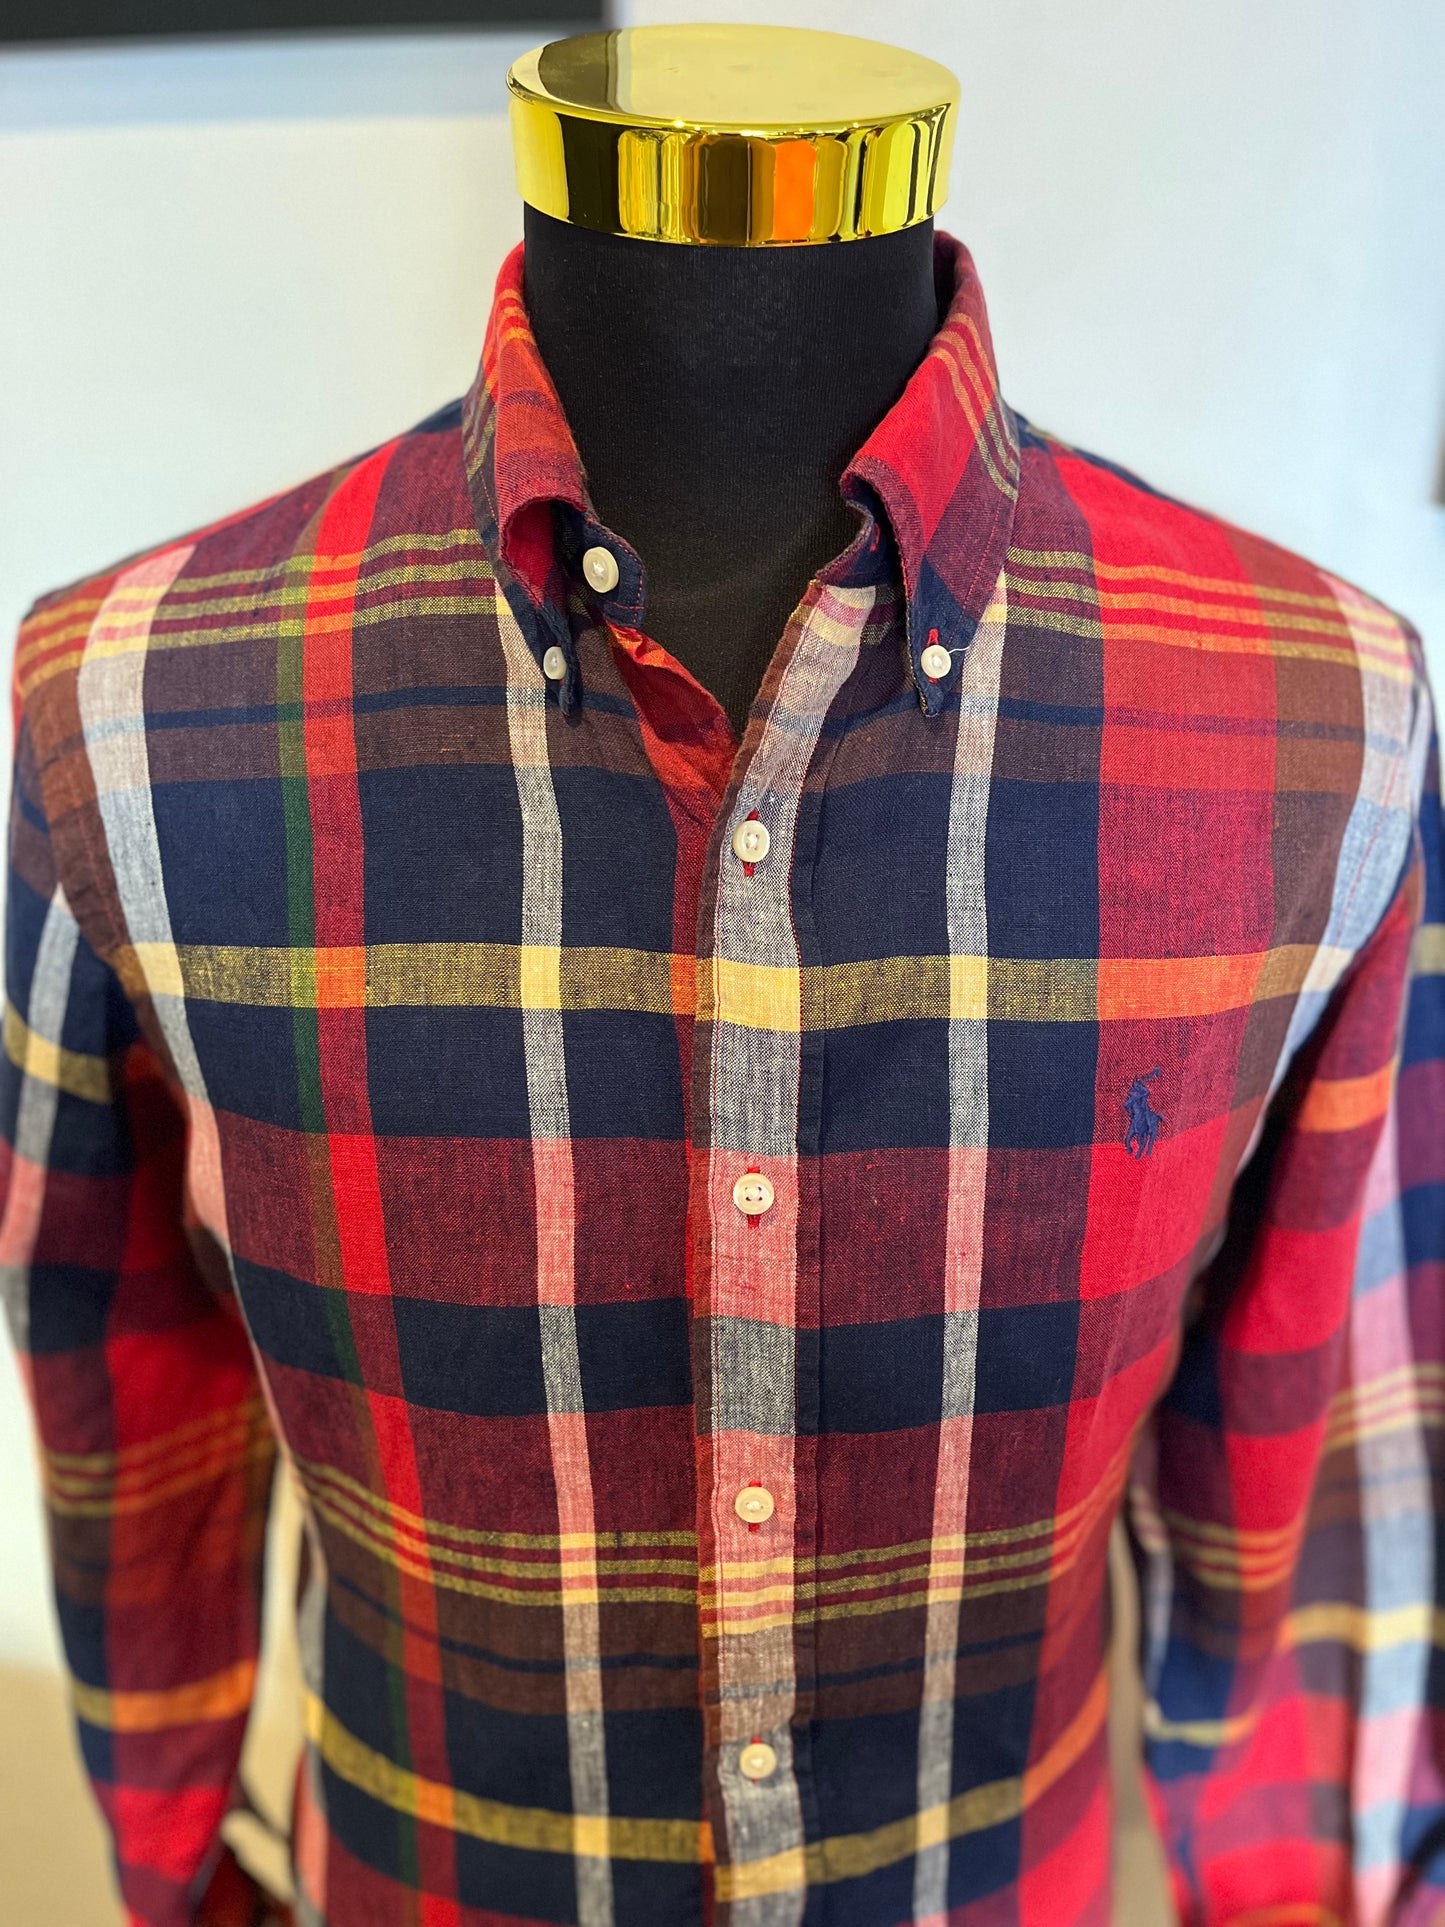 Ralph Lauren 100% Cotton Linen Check Shirt Size Large Custom Fit